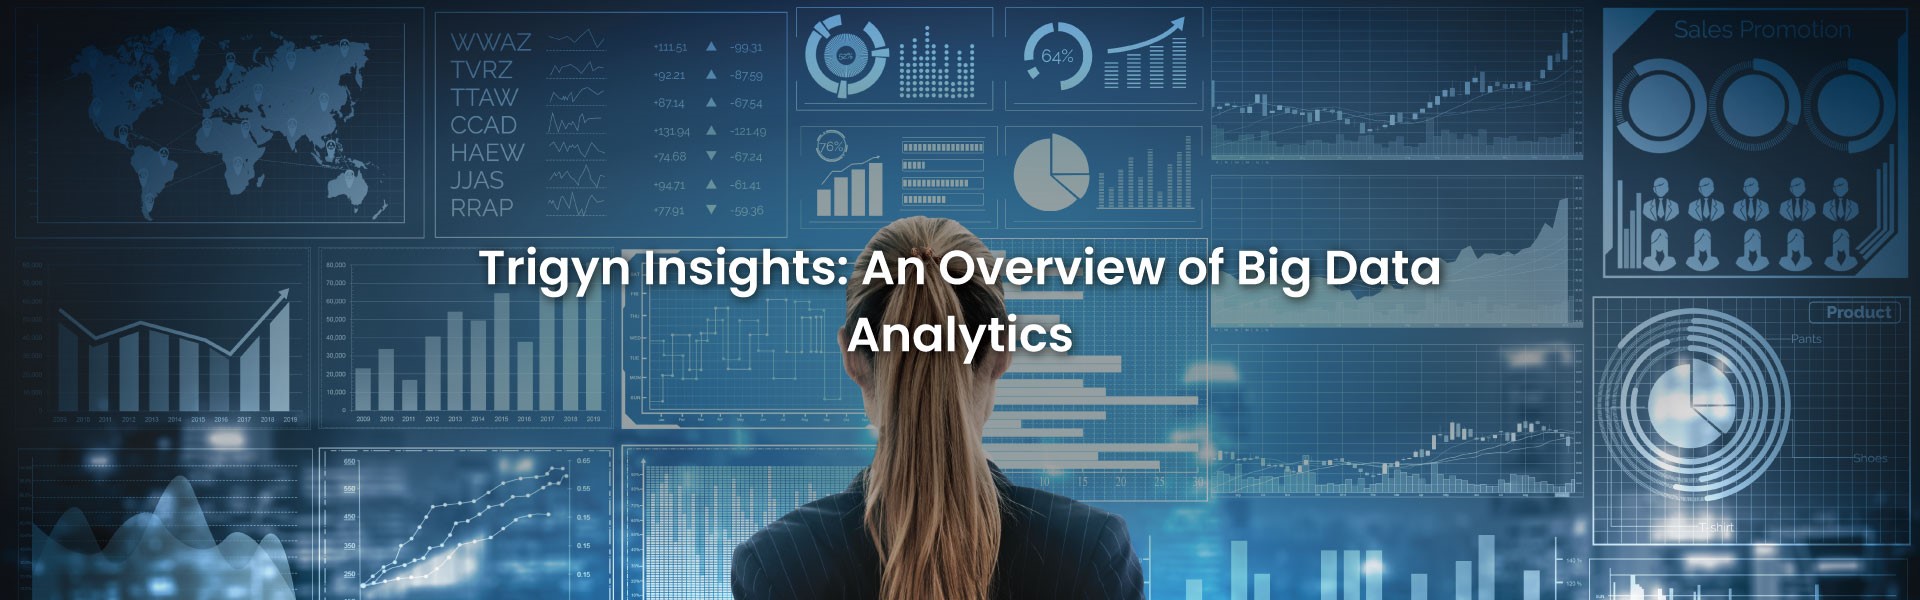 Big Data Analytics Overview